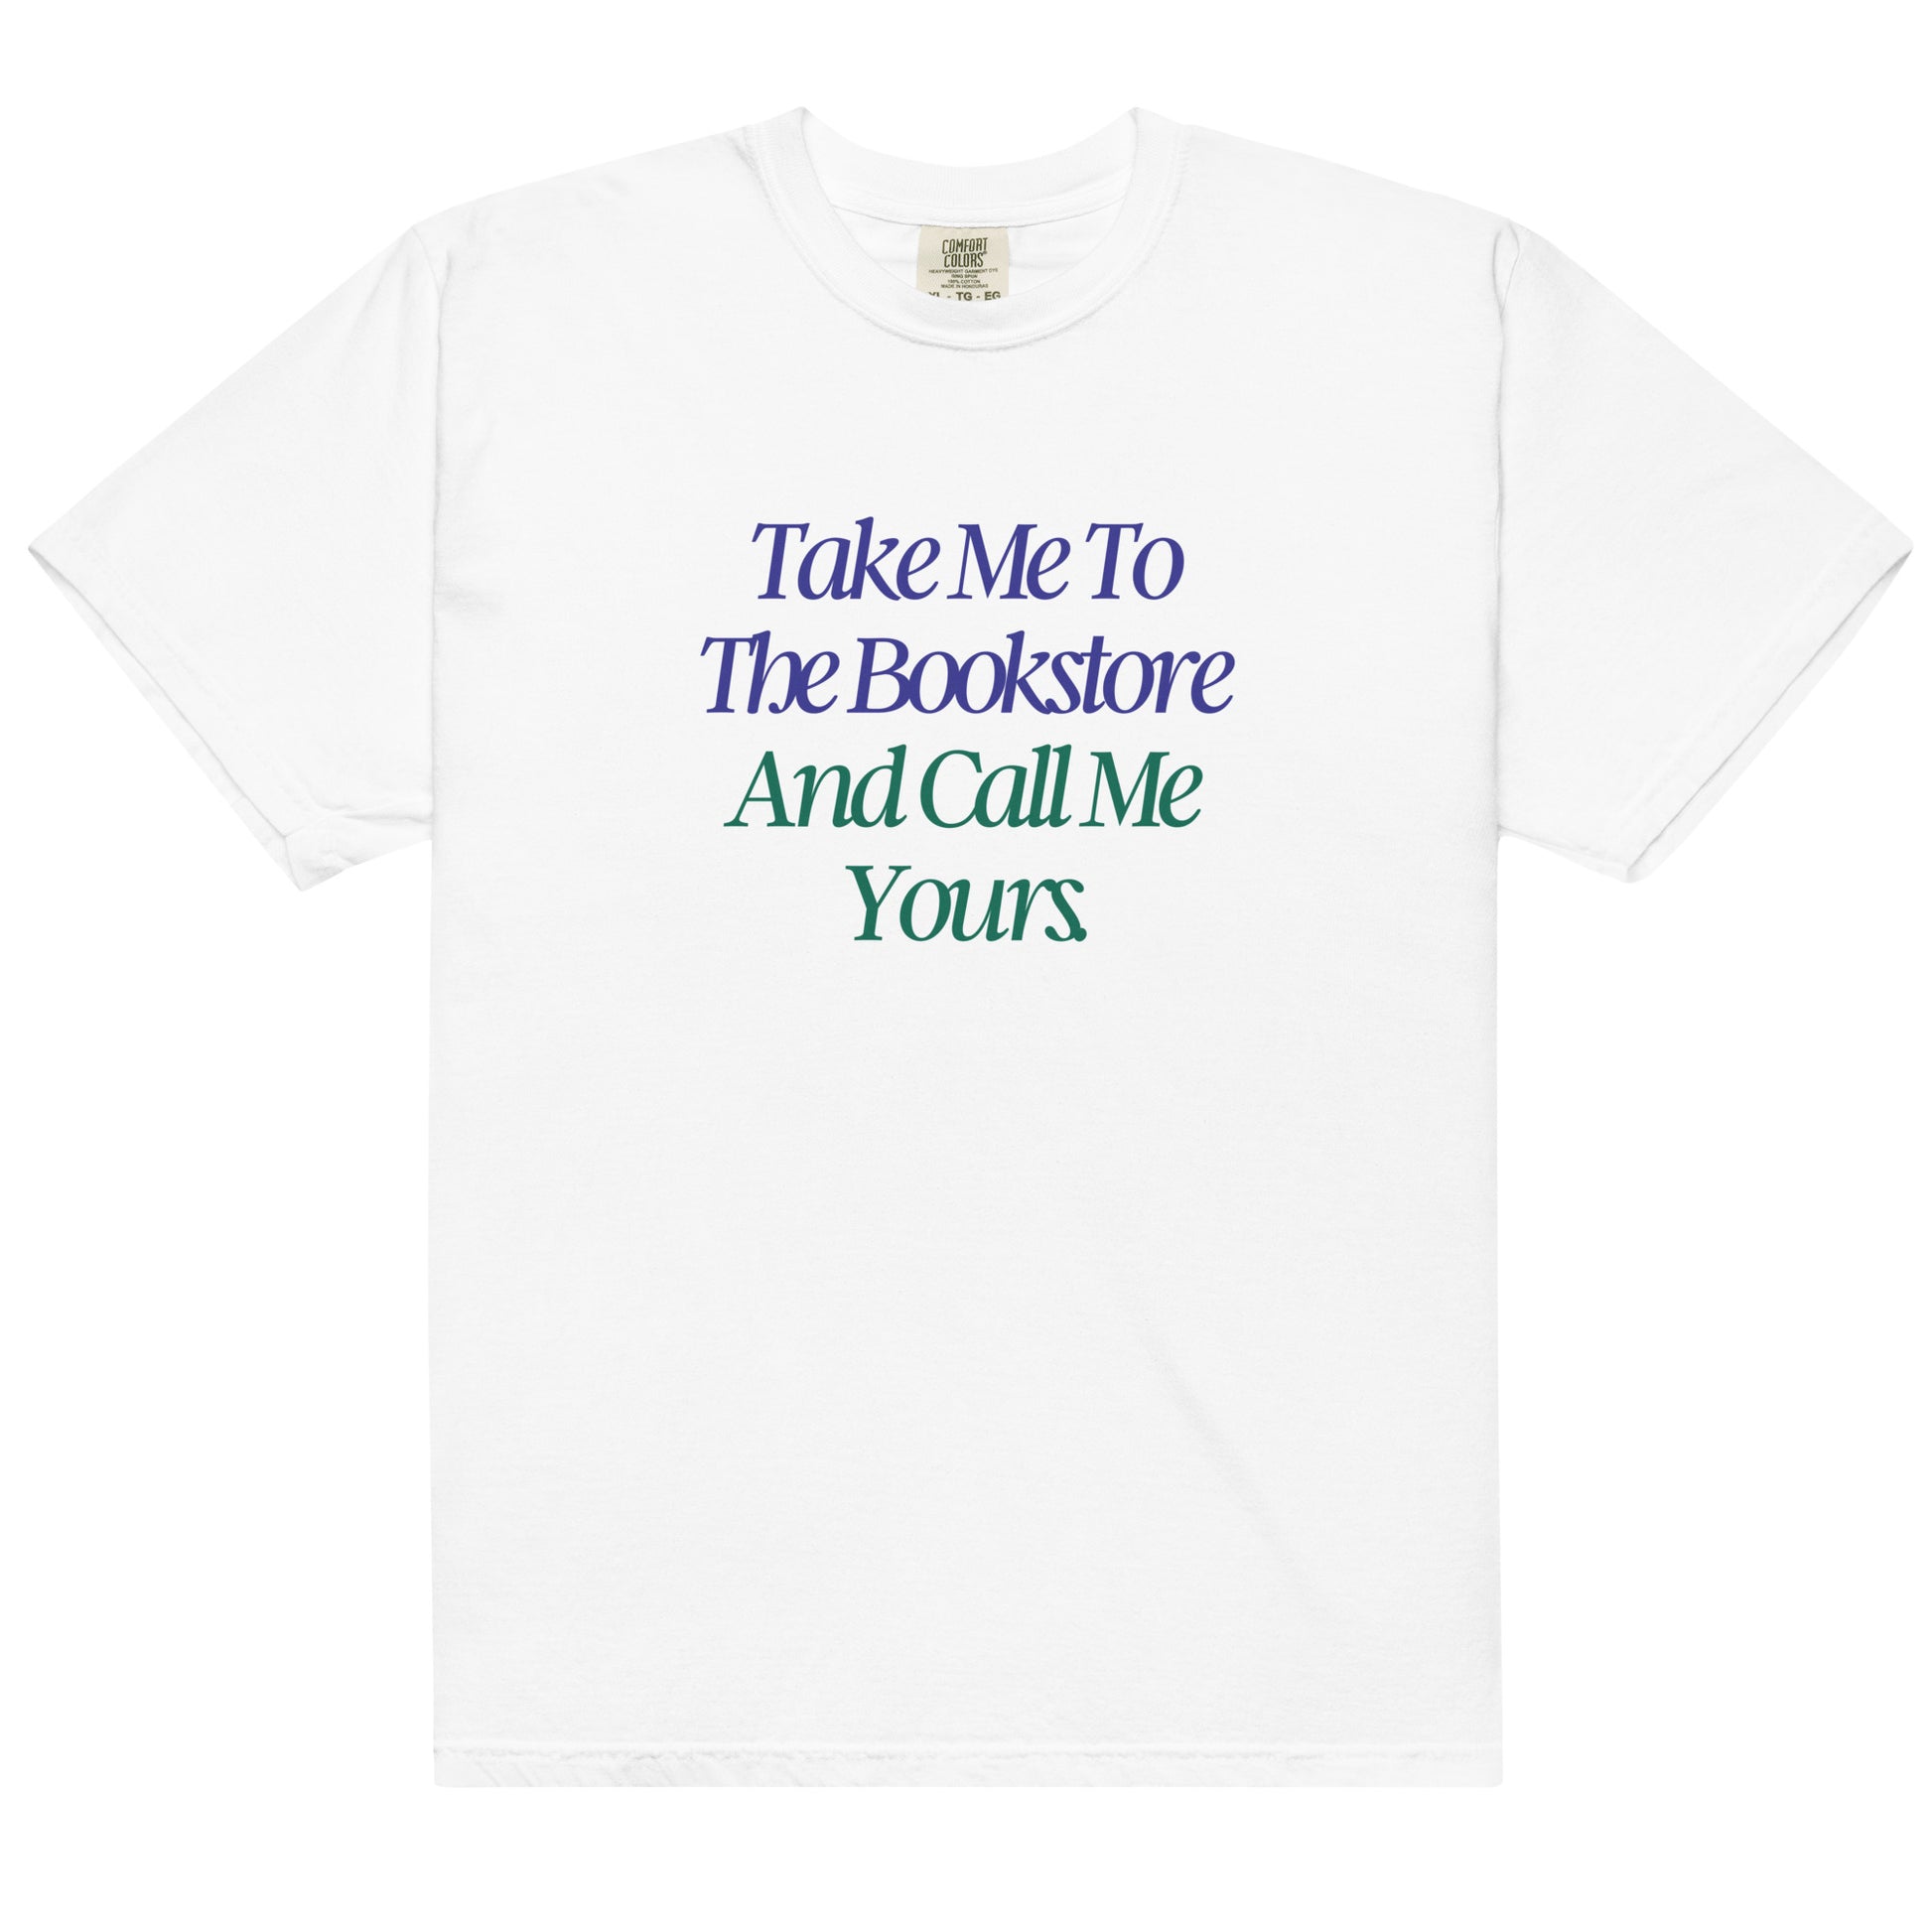 Take me to the bookstore and call me your romance book tee shirt